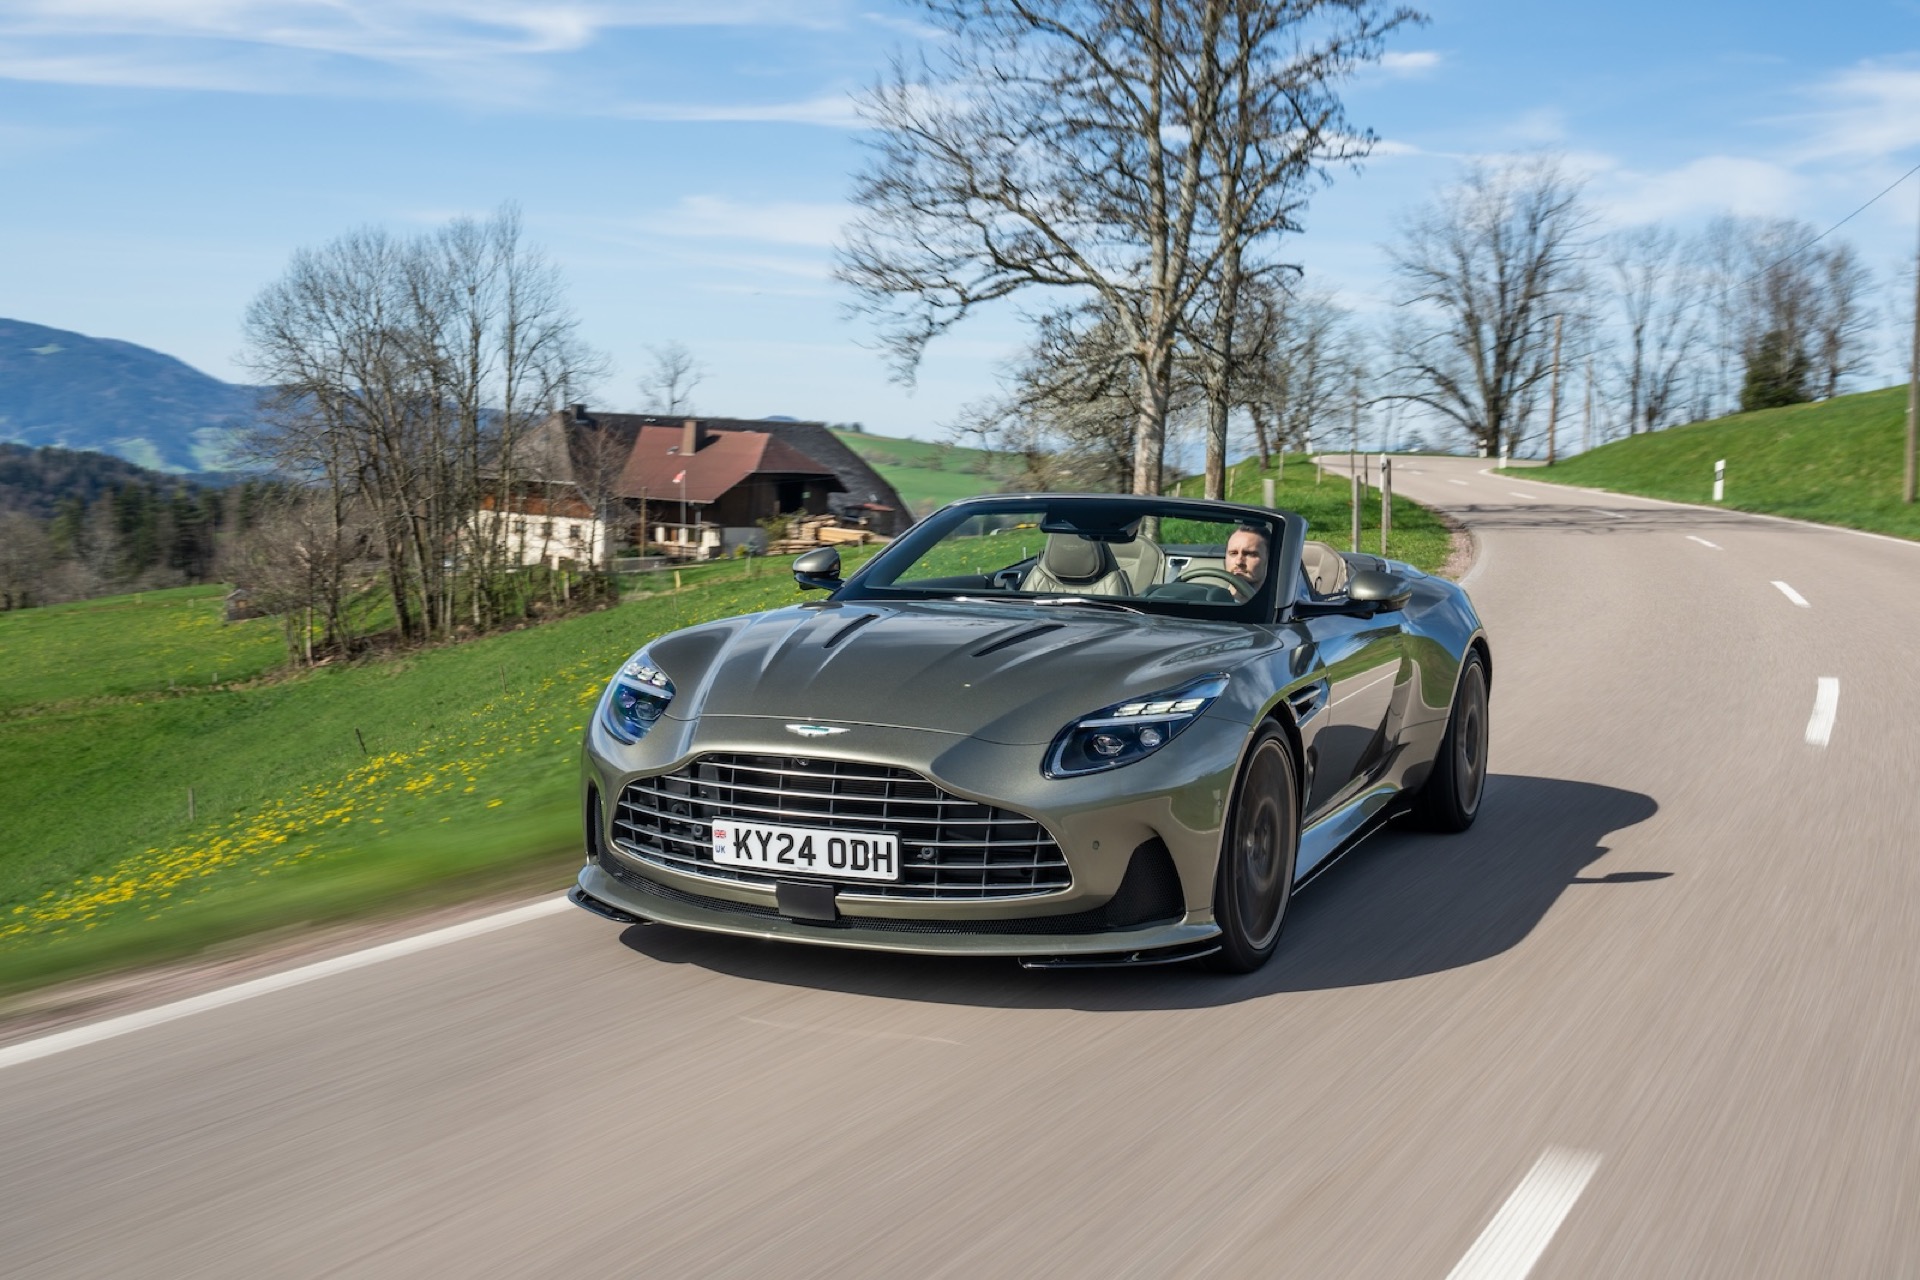 Aston Martin DB12 Volante Driven: An Exquisite Blend of Power & Elegance